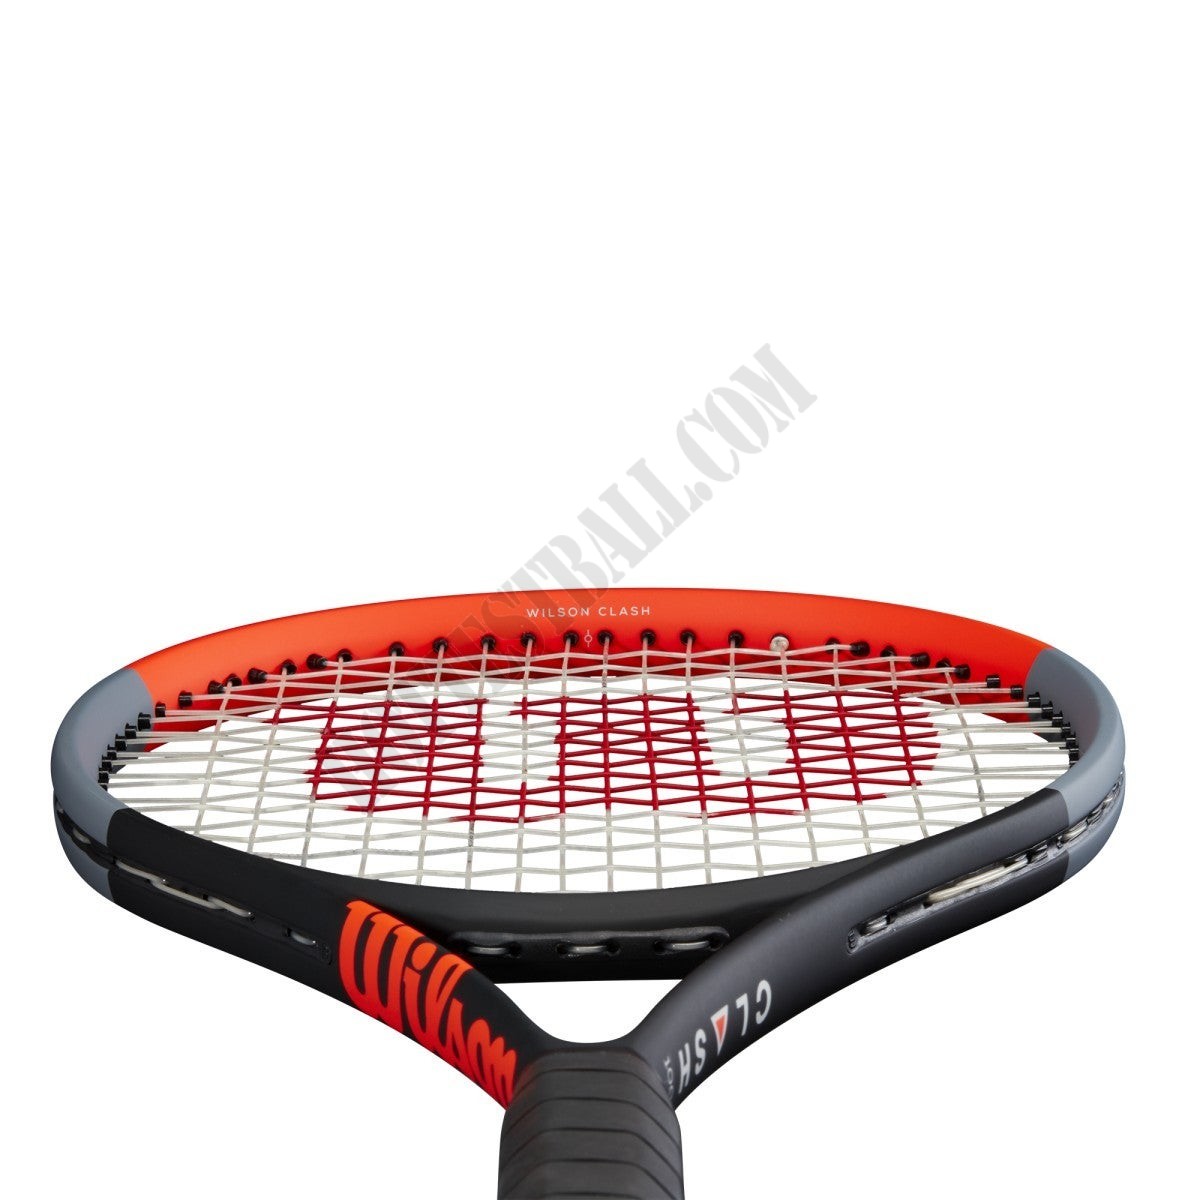 Clash 100L Tennis Racket - Wilson Discount Store - -3